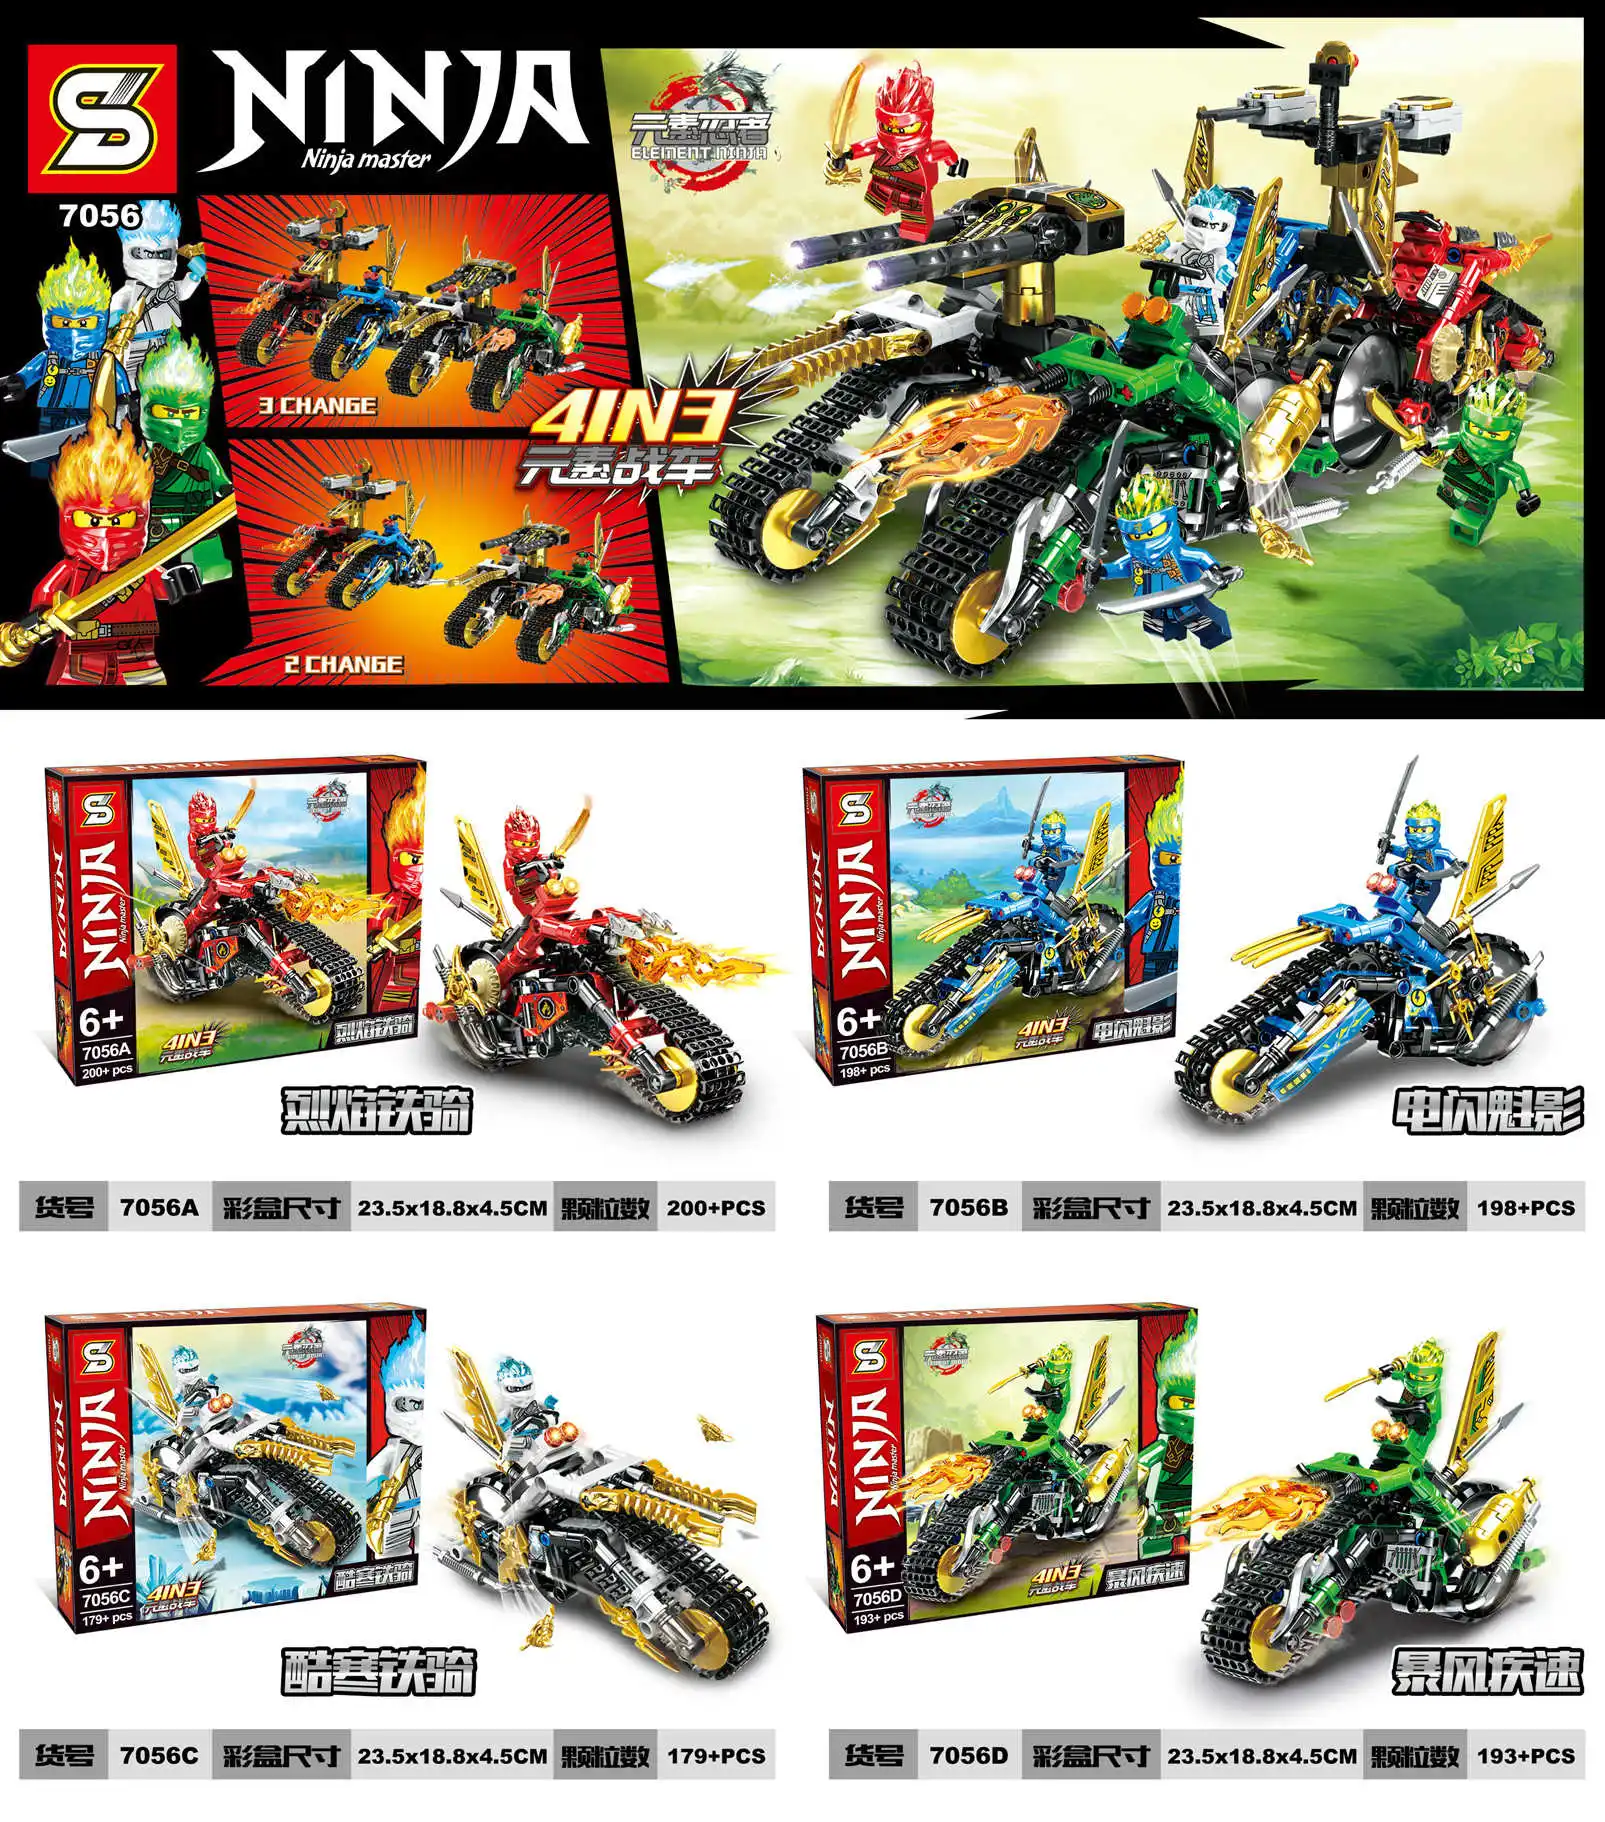 

2019 4pcs/lot NINJA Motorcycle Heroes Kai Jay Cole Zane Lloyd With Weapons Toy Compatible legoinglys ninjagoingly Figure Blocks